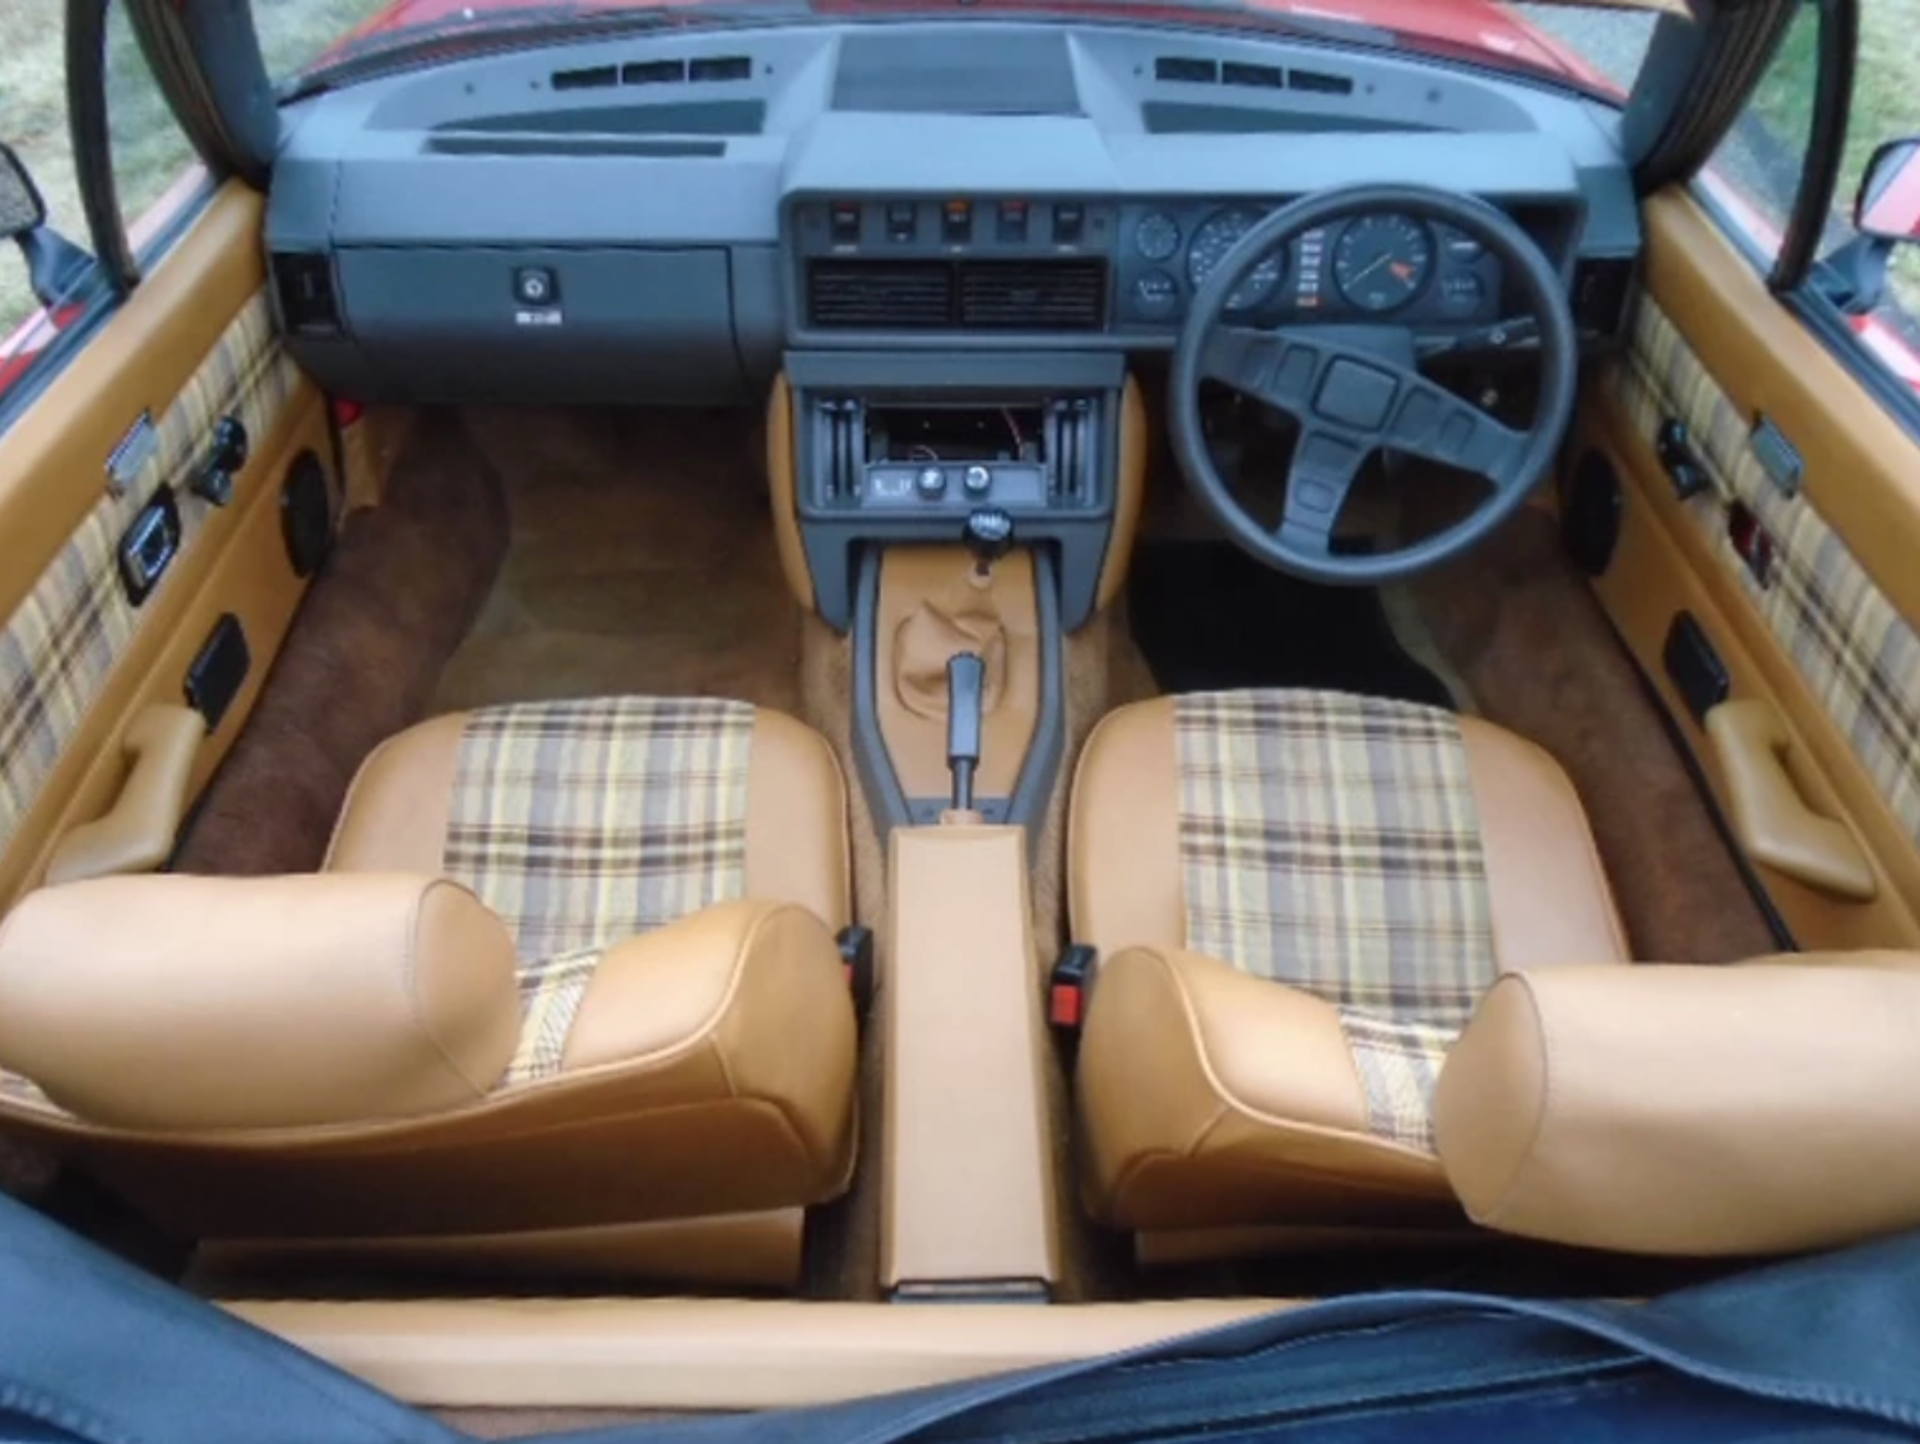 1980 Triumph TR7 Convertible (restored) - Image 4 of 6